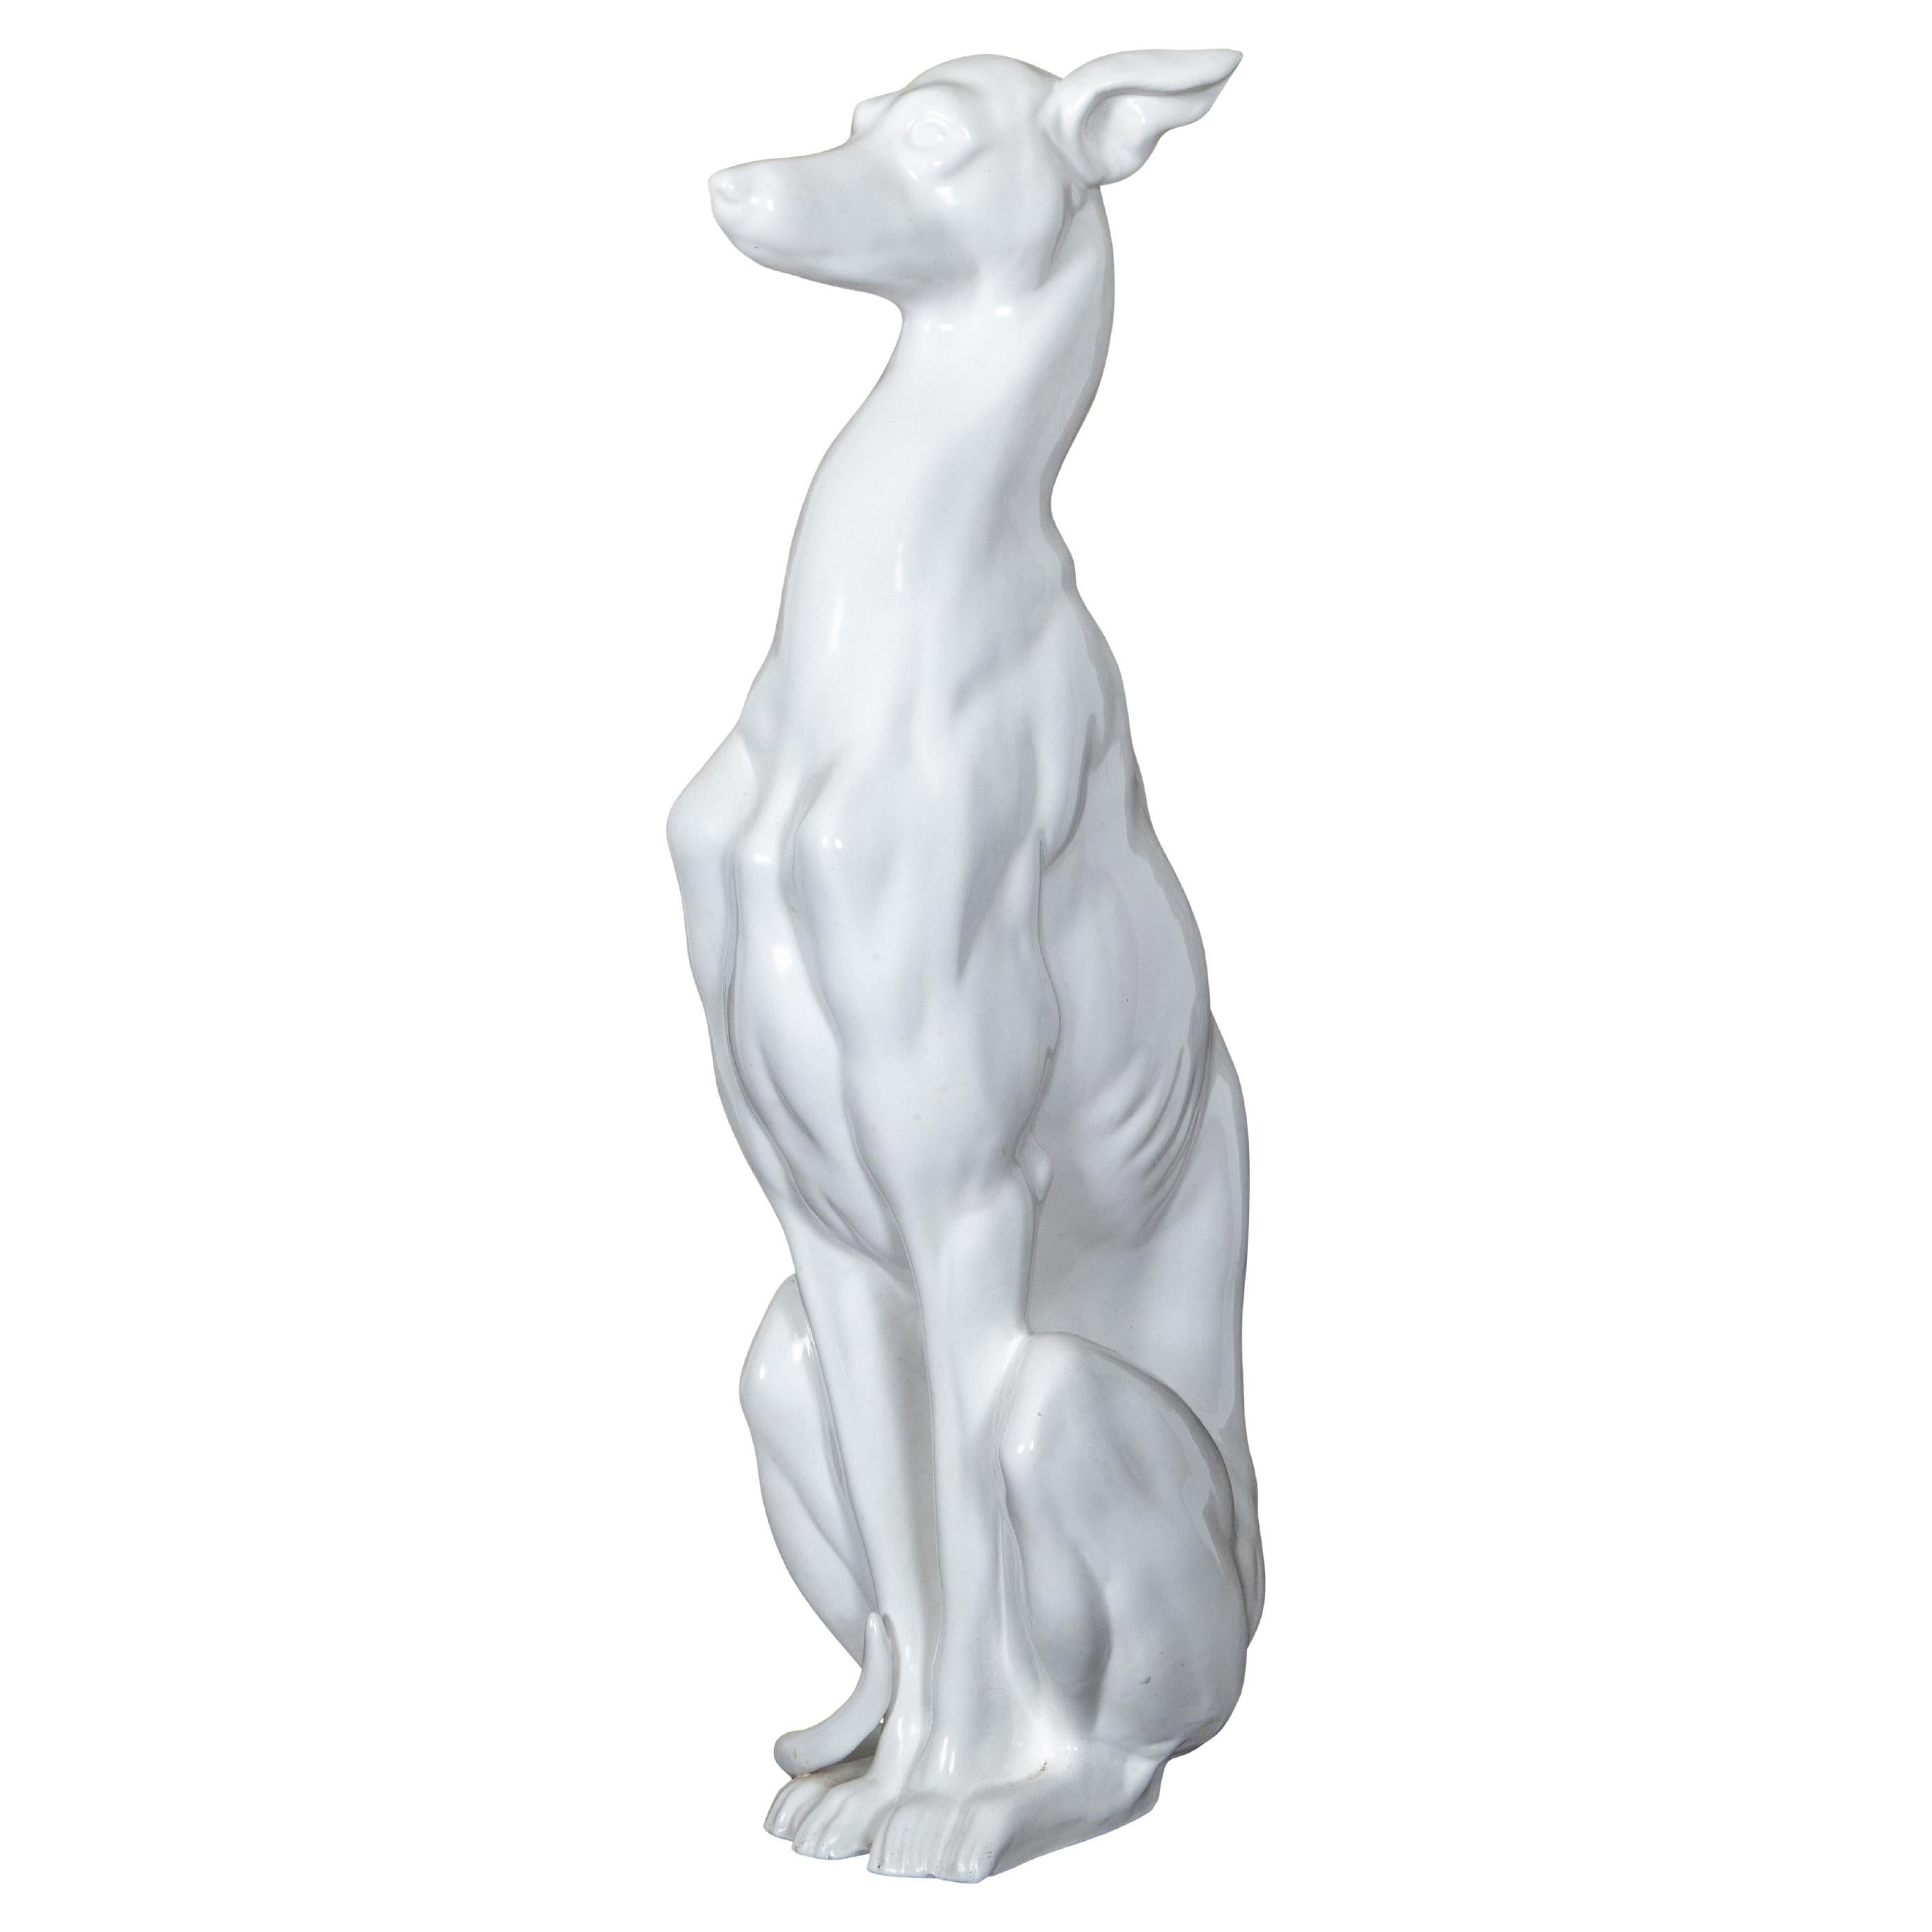 Italian Midcentury White Porcelain Dog Sculpture of a Sitting Greyhound